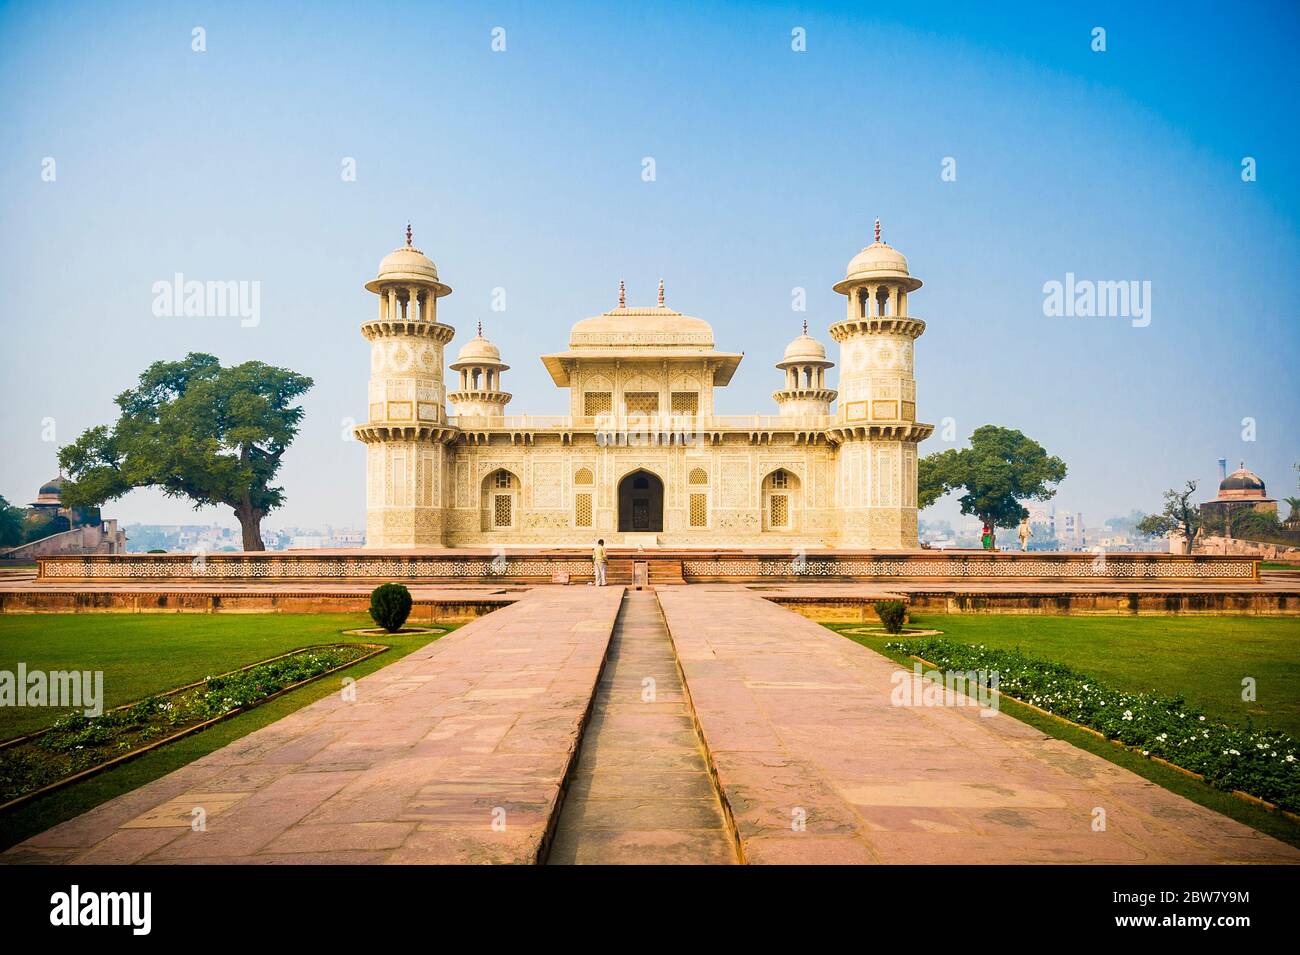 Mausoleum of Itmad-ud-Daulah also called the Baby Taj or Jewel box. Agra, Uttar Pradesh, India. Stock Photo